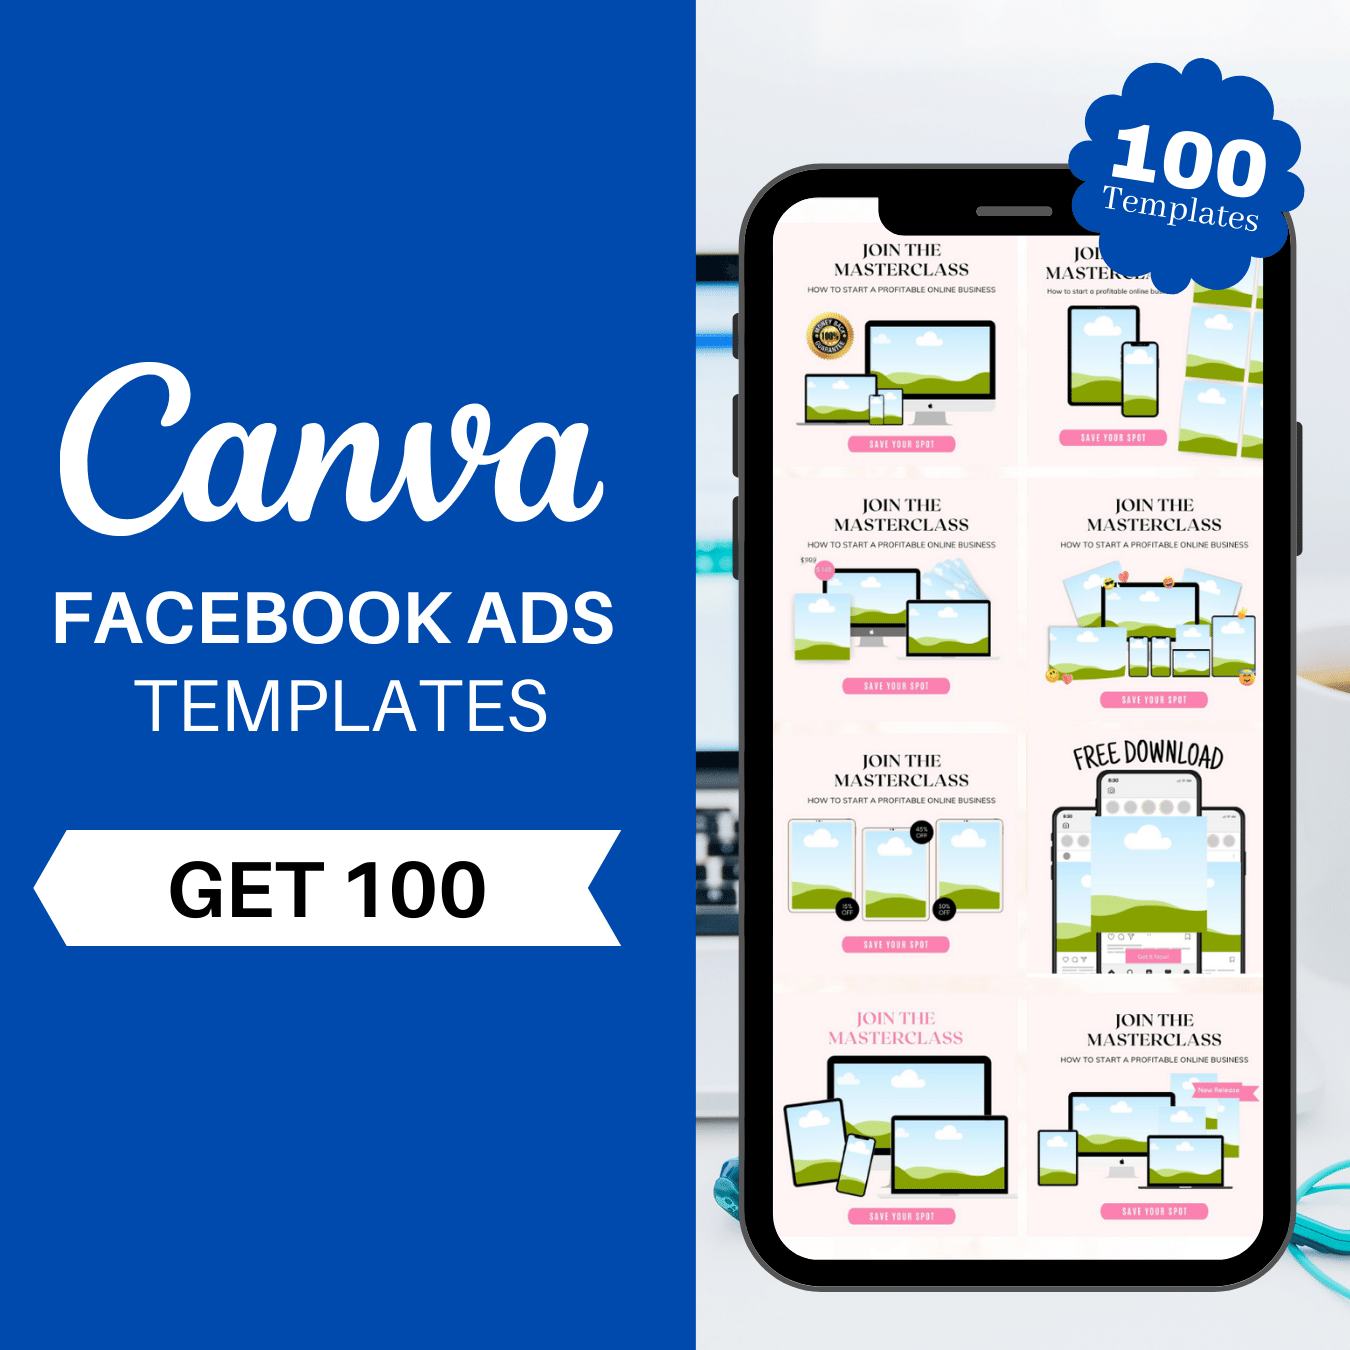 CANVA Facebook Ads templates - Get 100